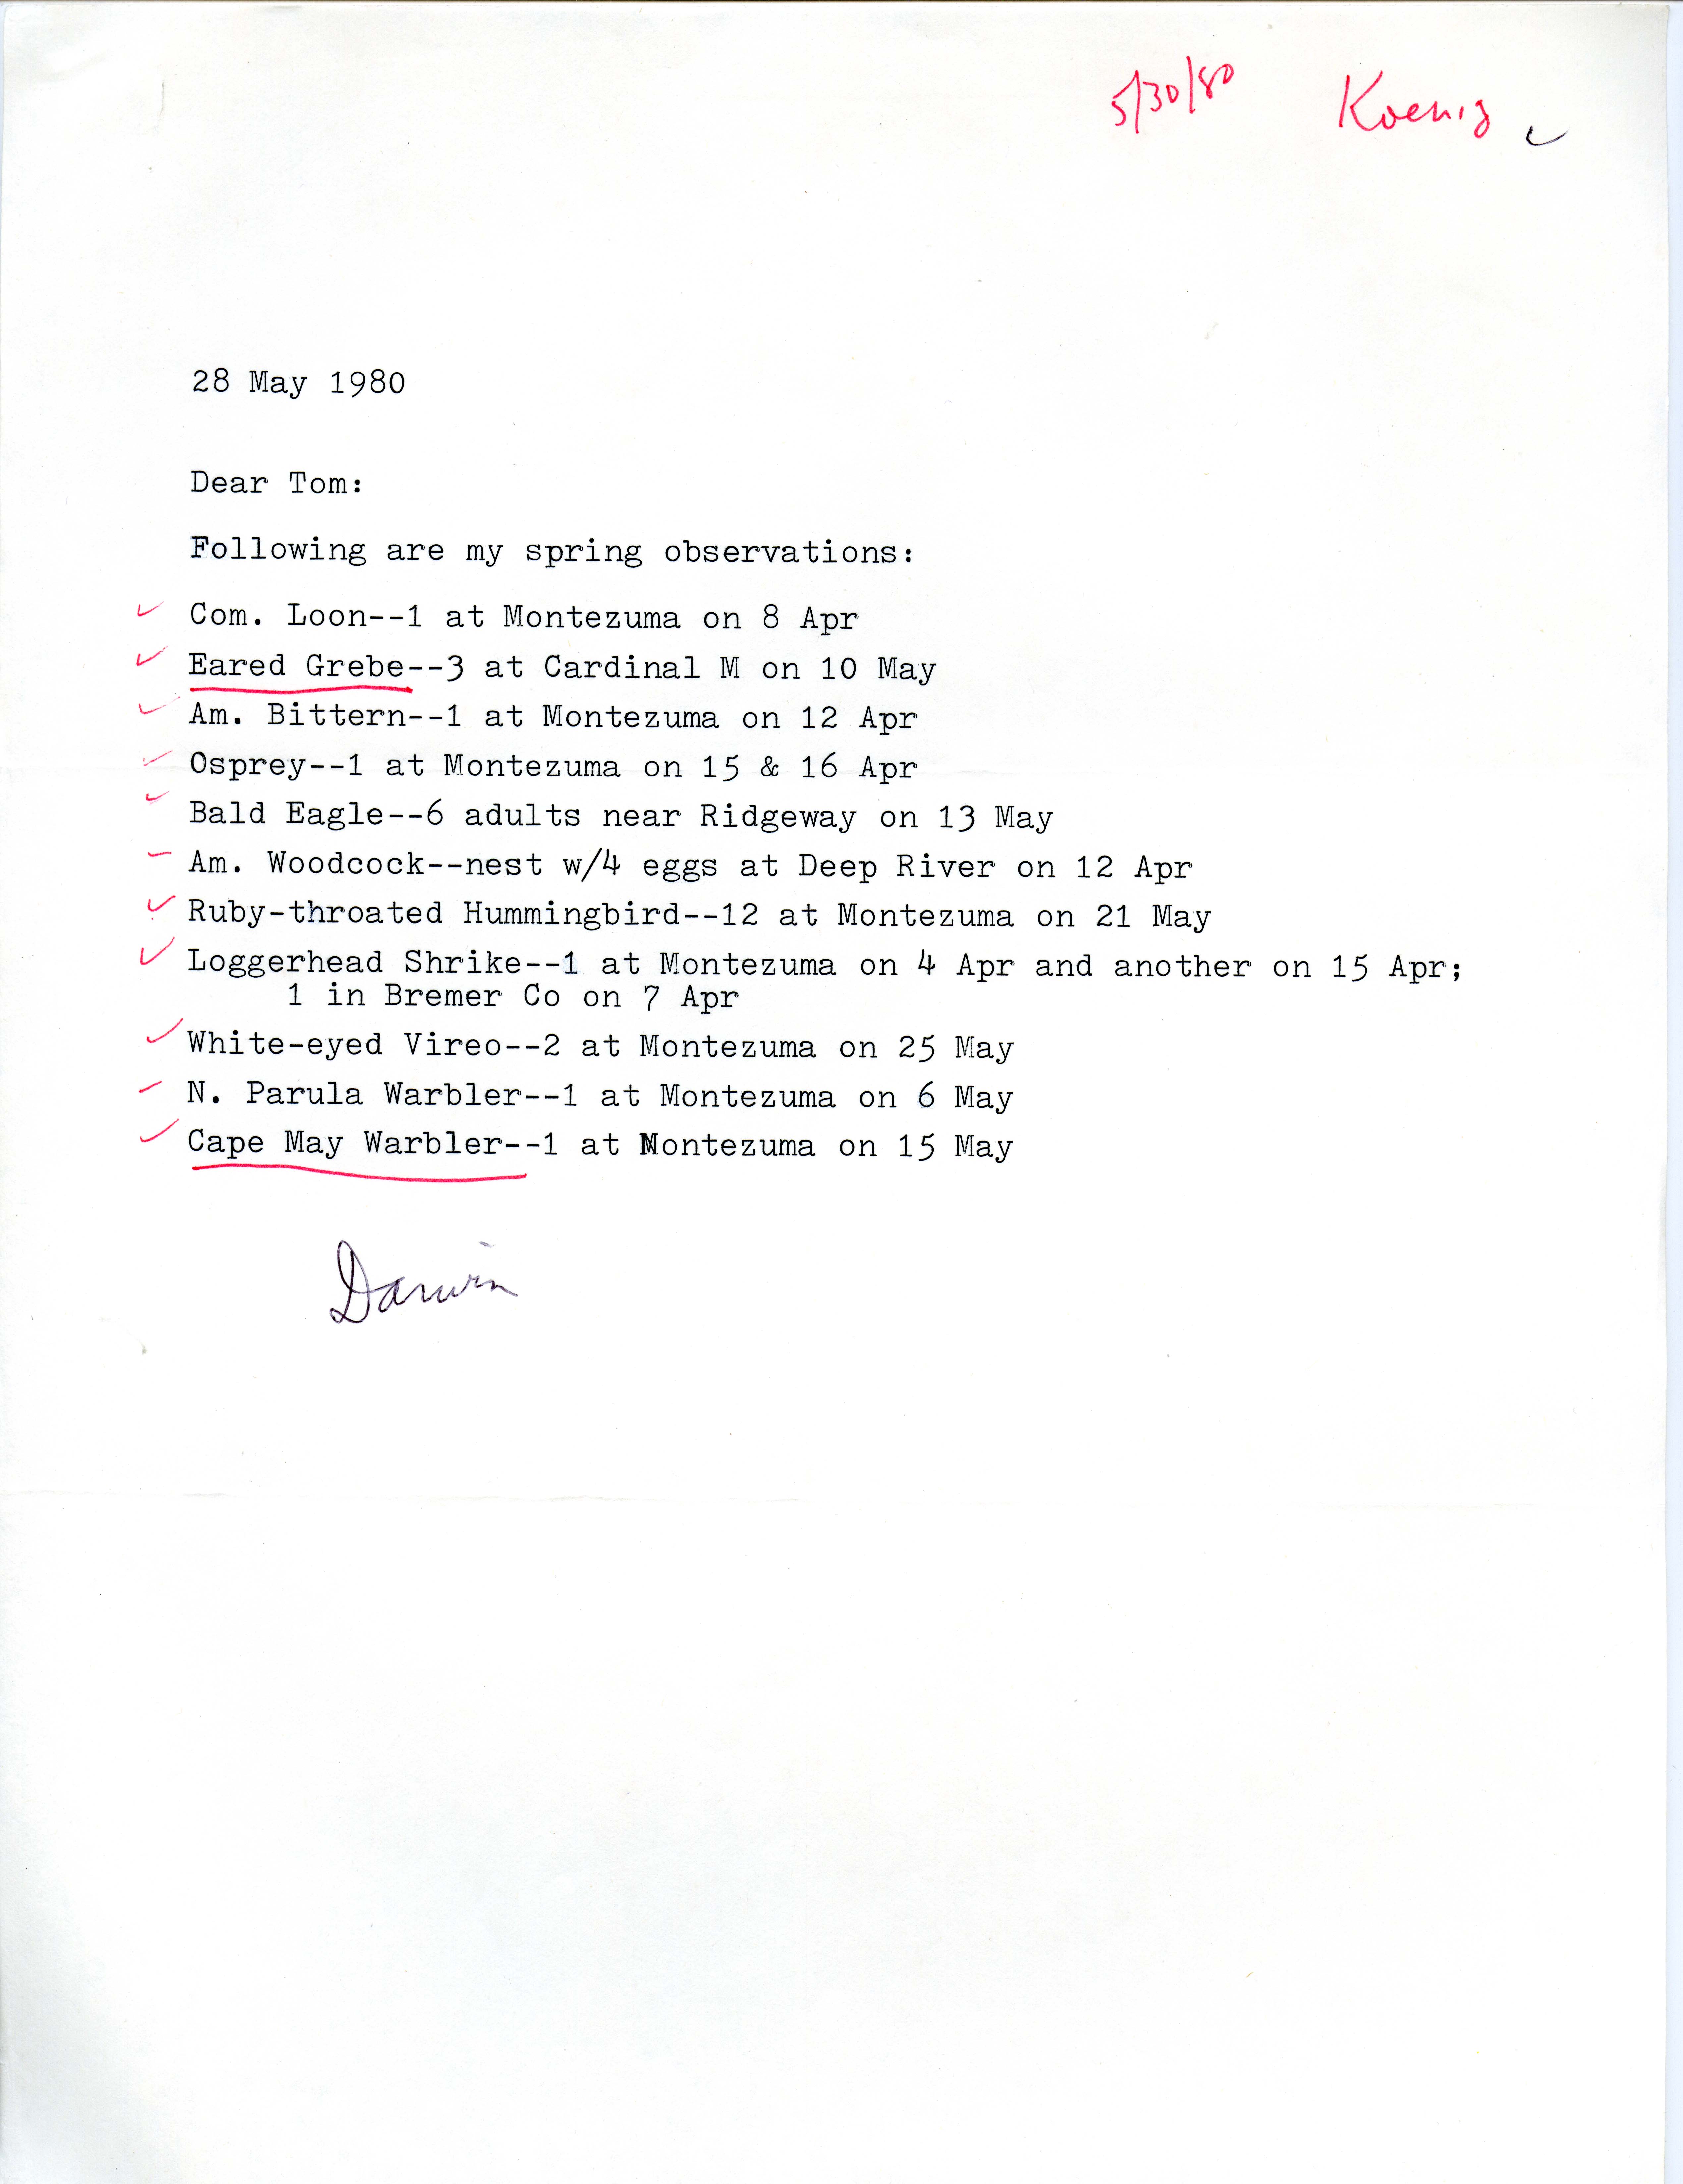 Darwin Koenig letter to Thomas H. Kent regarding bird sightings, May 28, 1980